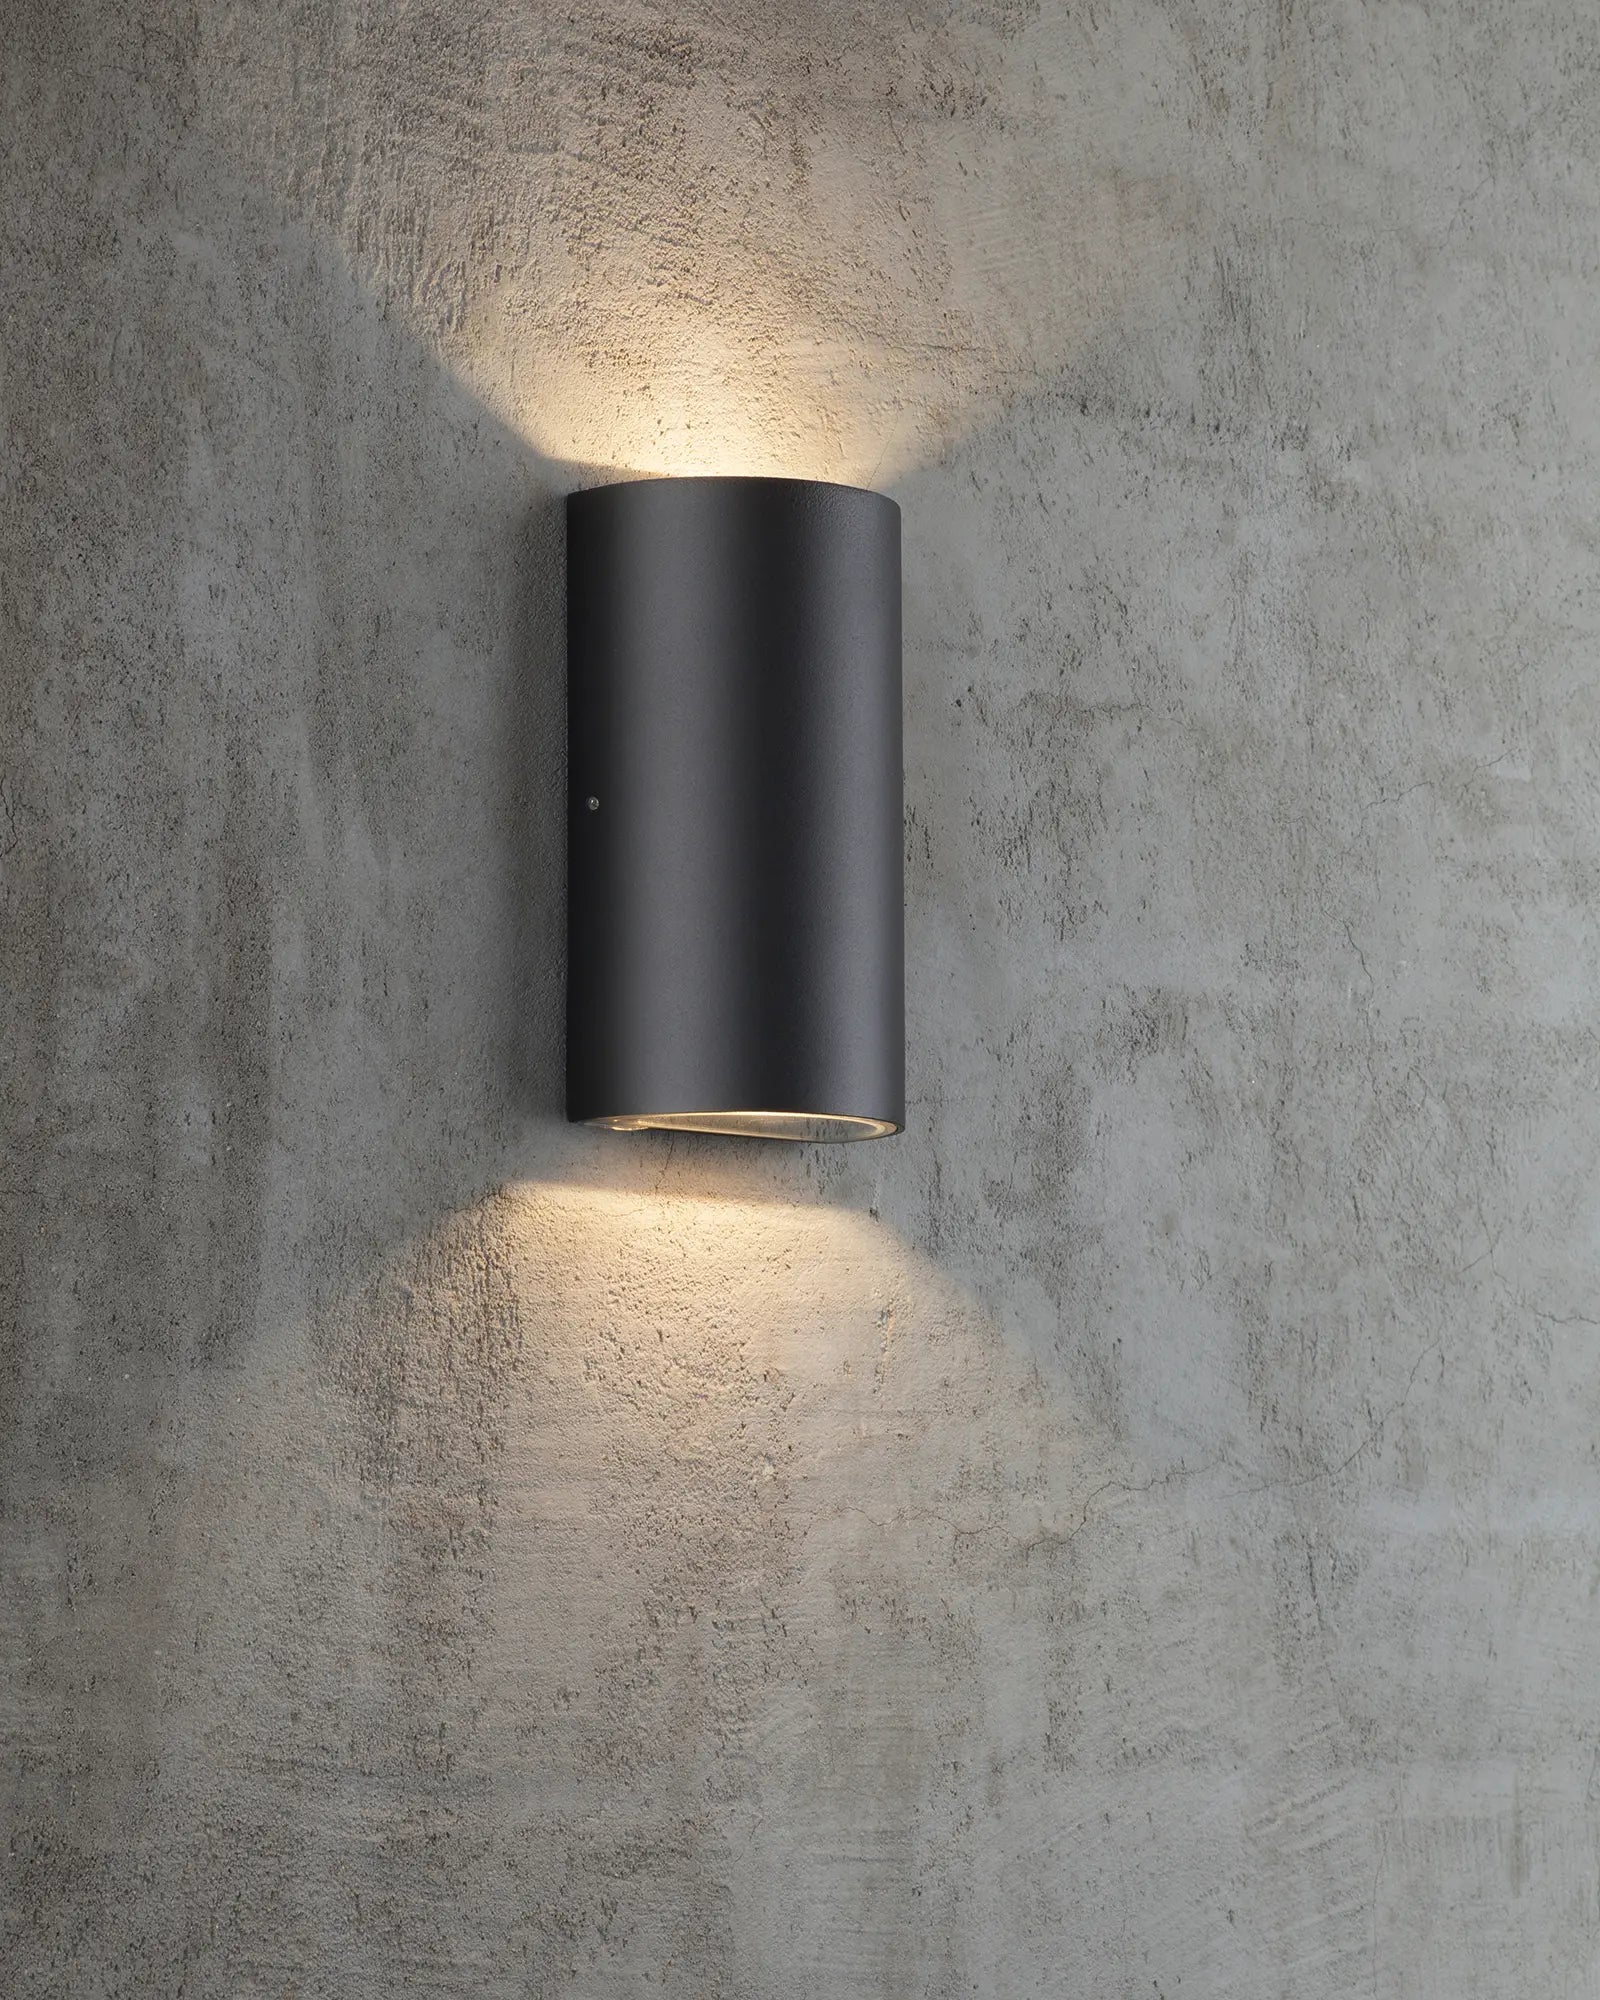 Rold minimal scandinavian half cylinder outdoor wall light in black on concrete wall